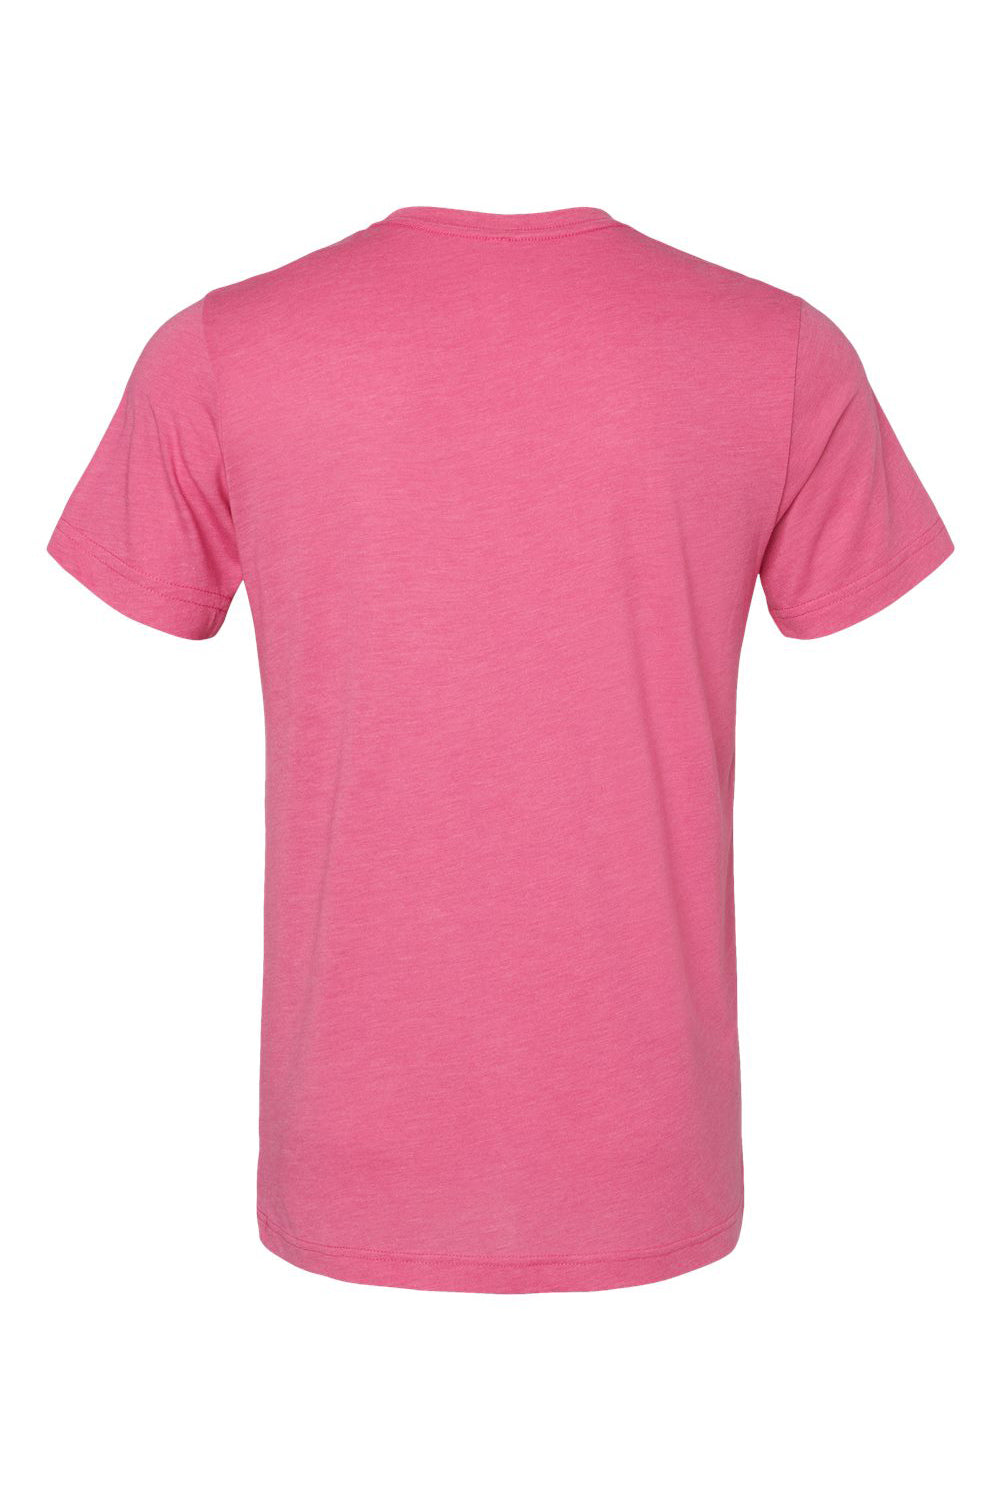 Bella + Canvas BC3413/3413C/3413 Mens Short Sleeve Crewneck T-Shirt Charity Pink Flat Back